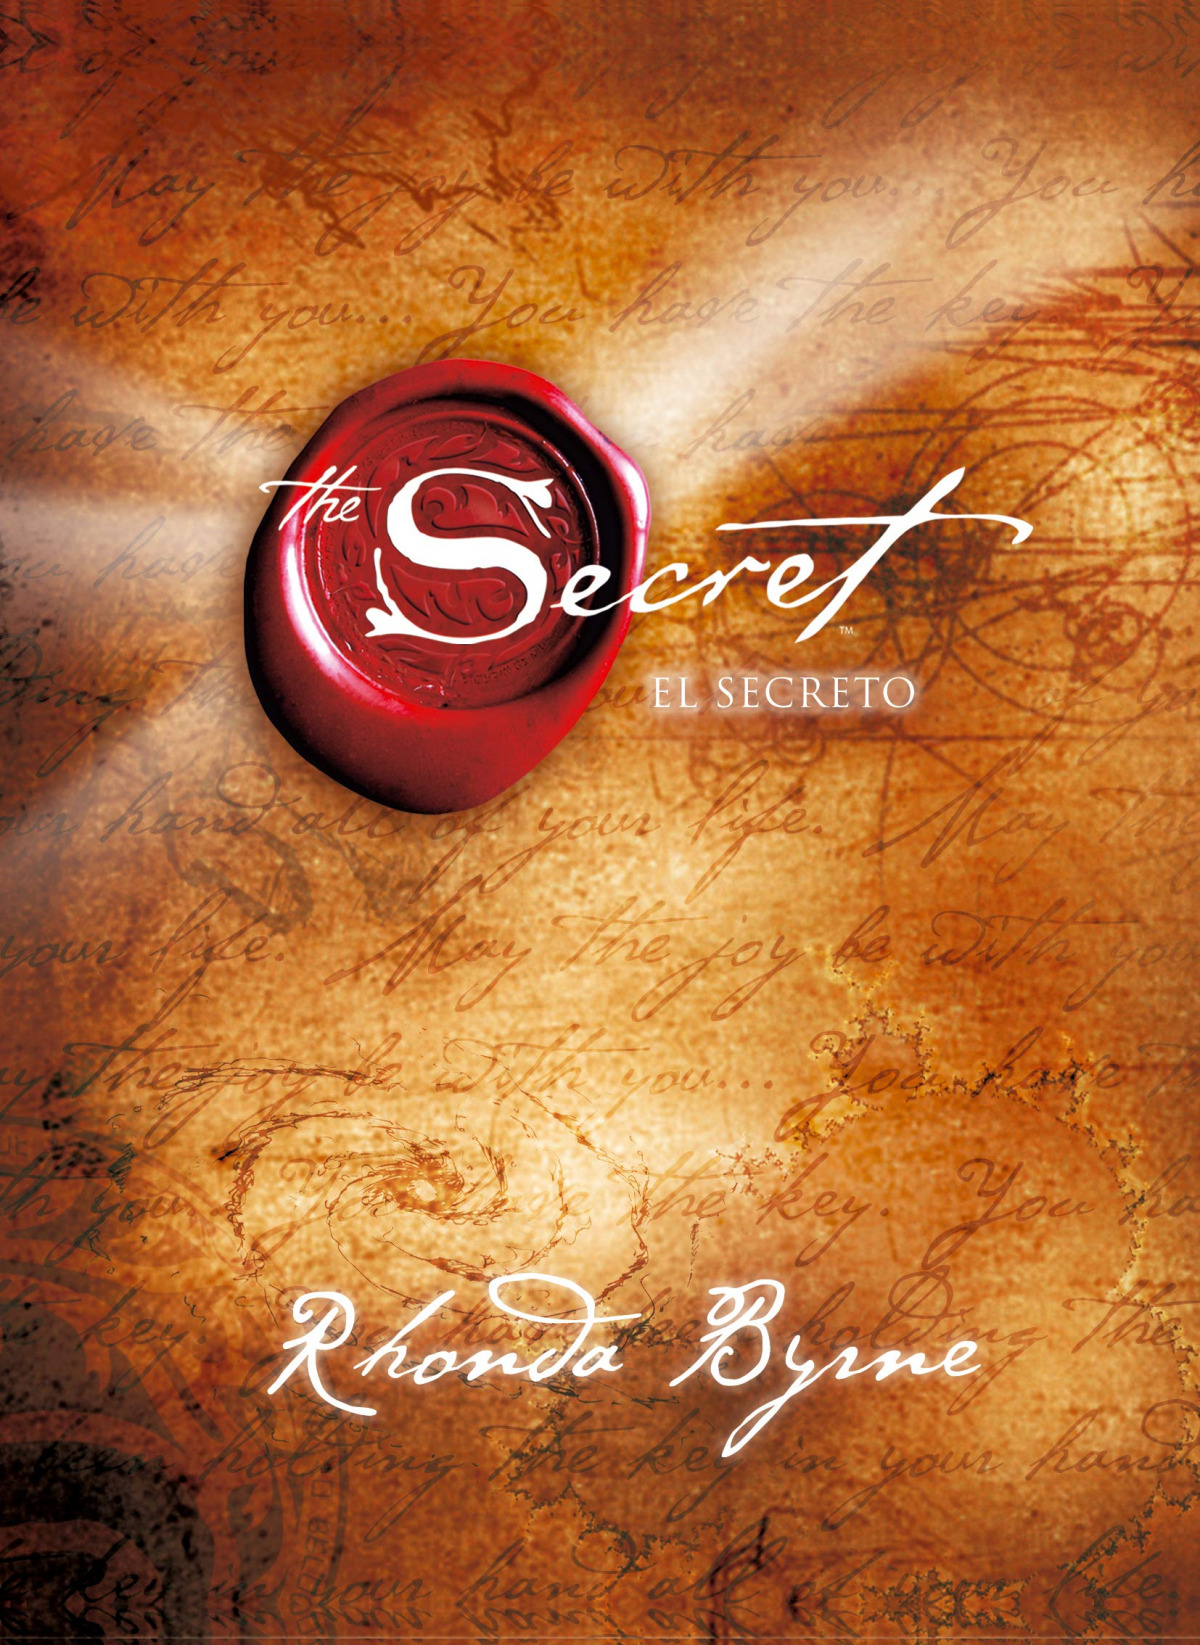 El secreto - Byrne, Rhonda